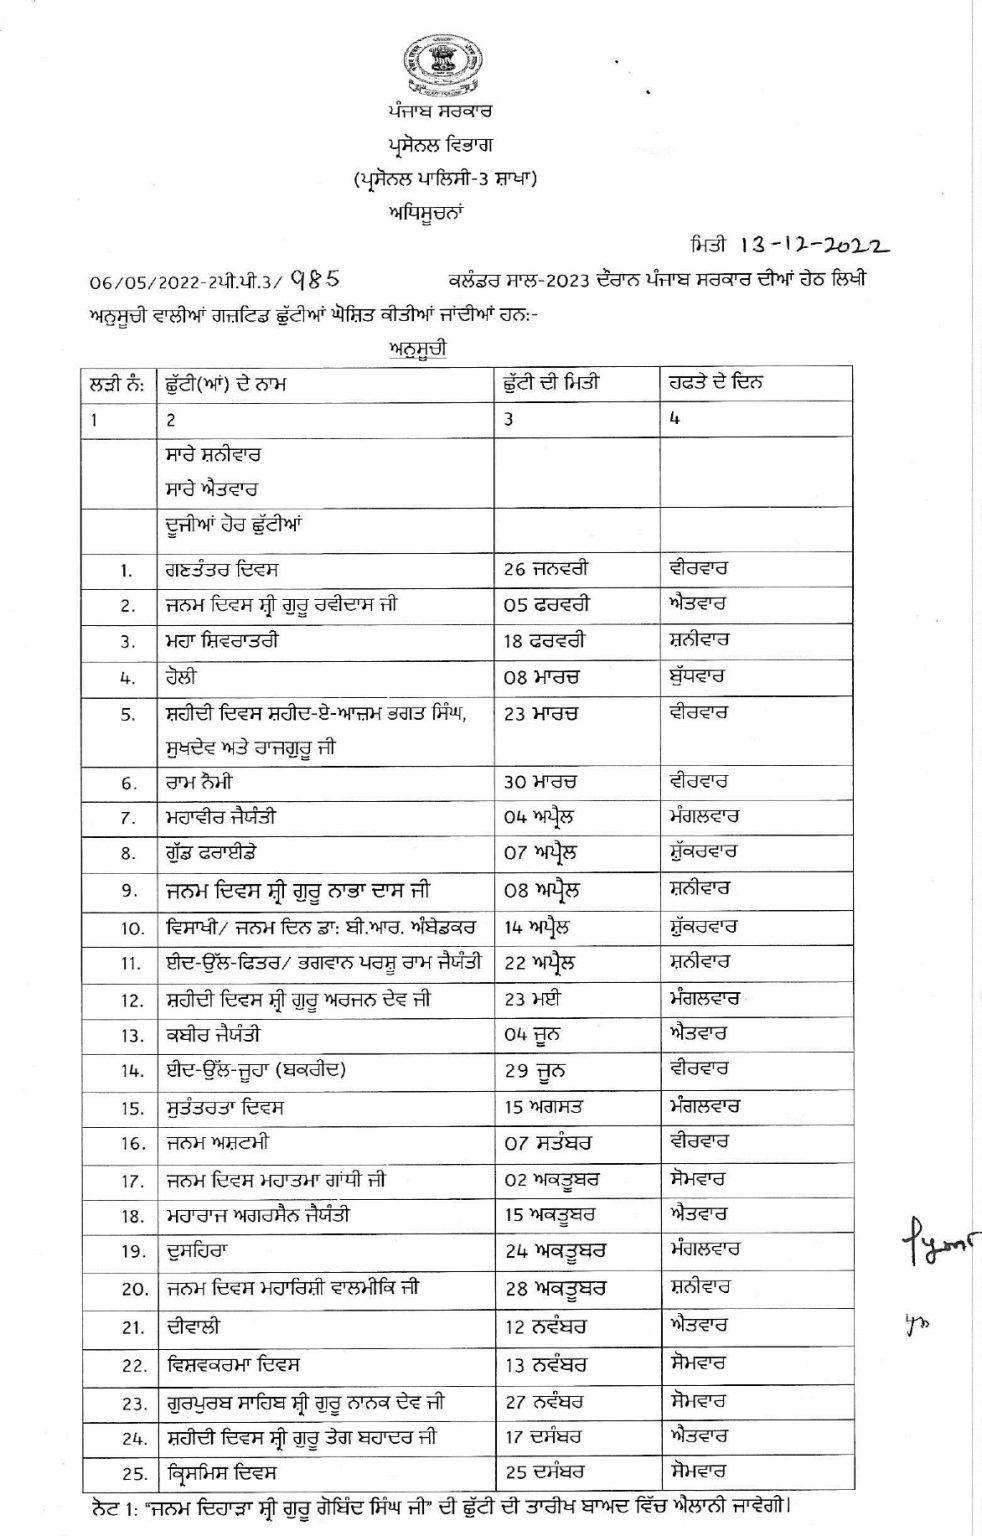 Punjab Govt Calendar 2023 PDF, Punjab Government Holidays 2023 List